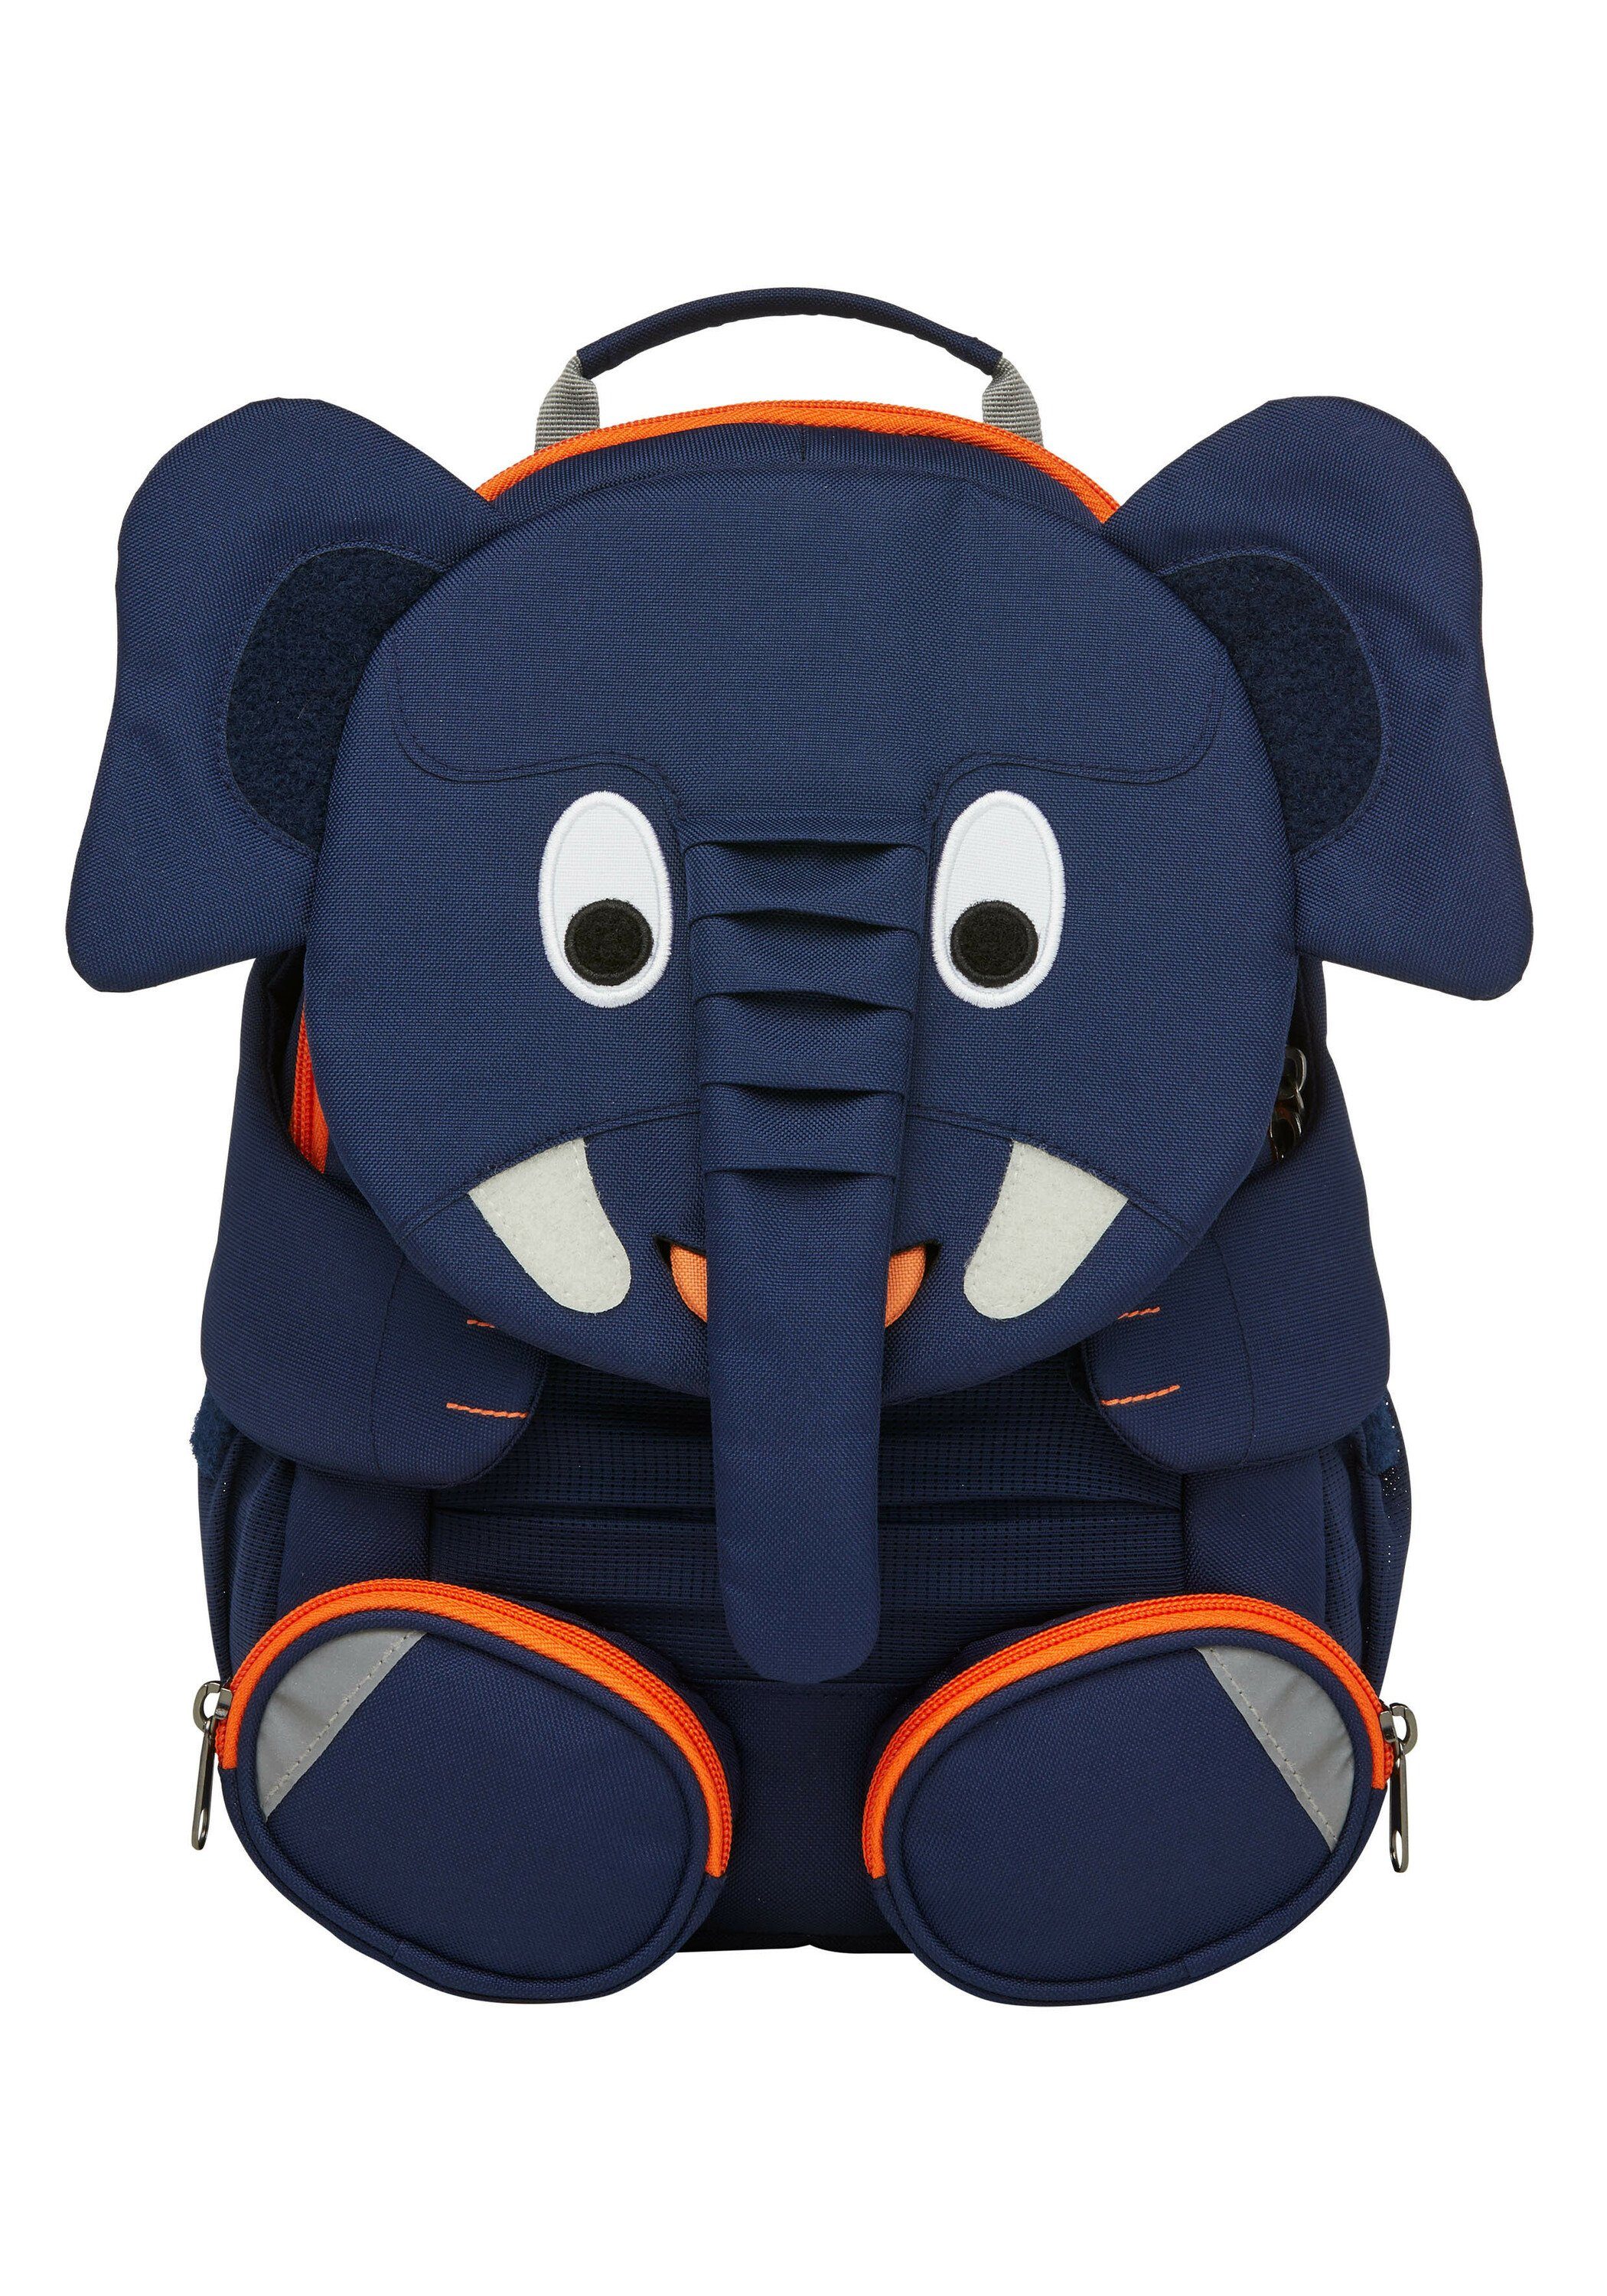 Blau Elefant Kinderrucksack GROßER ELEFANT FREUND - Affenzahn